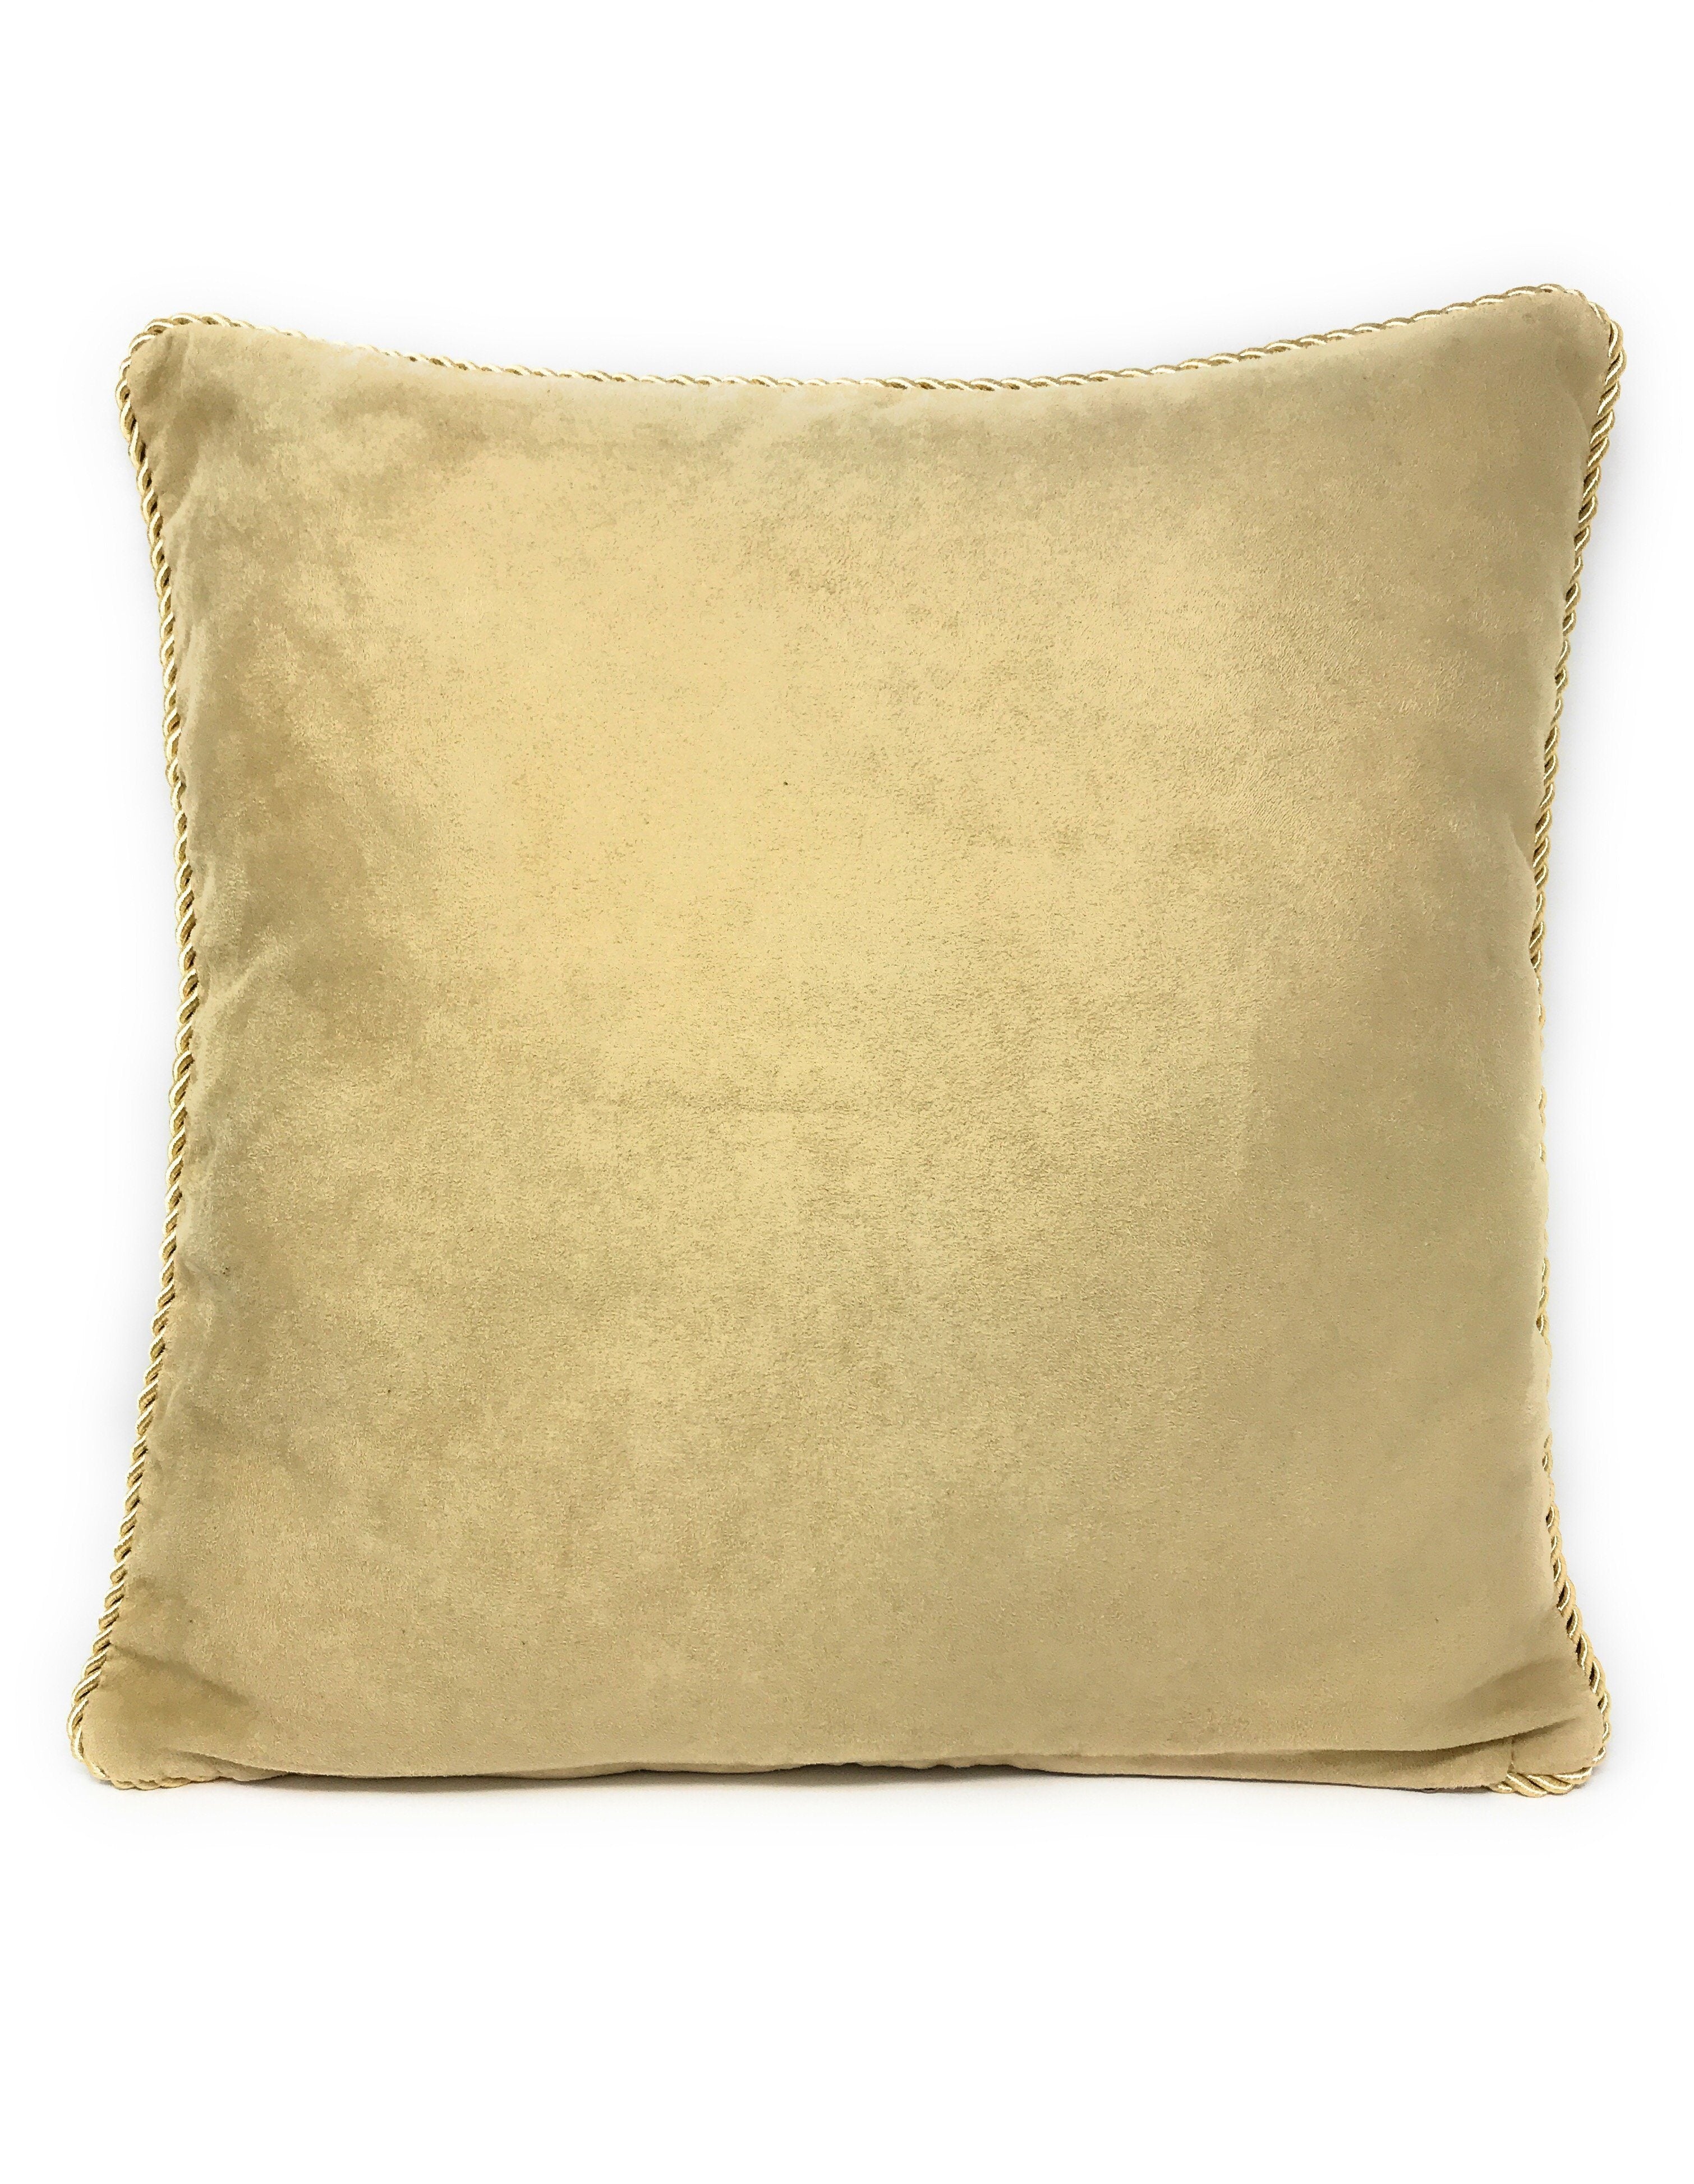 Tache Postmarked With Love Throw Pillow Cushion Cover (CC-15051) - Tache Home Fashion